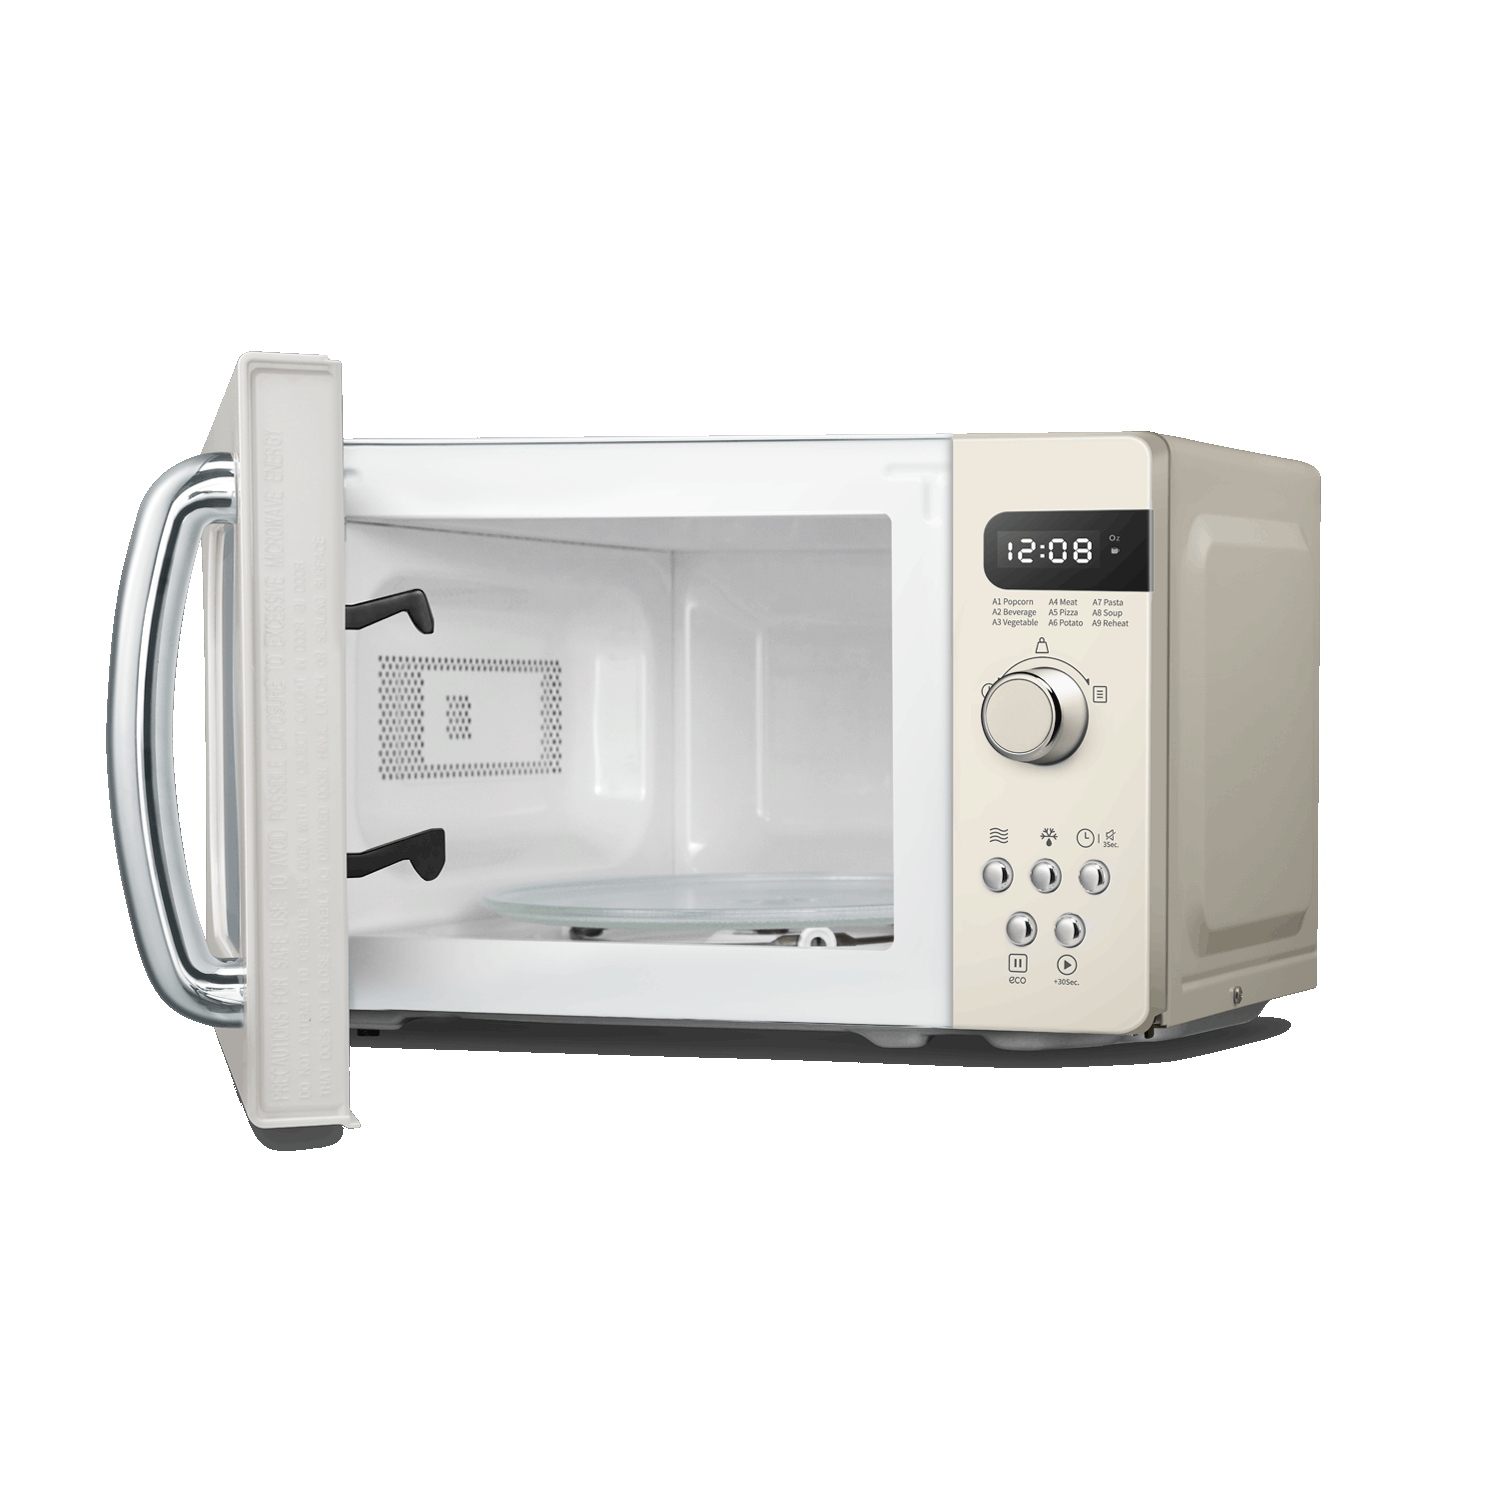 Daewoo 0.7 Cu. Ft. Retro Microwave Oven, Cream White